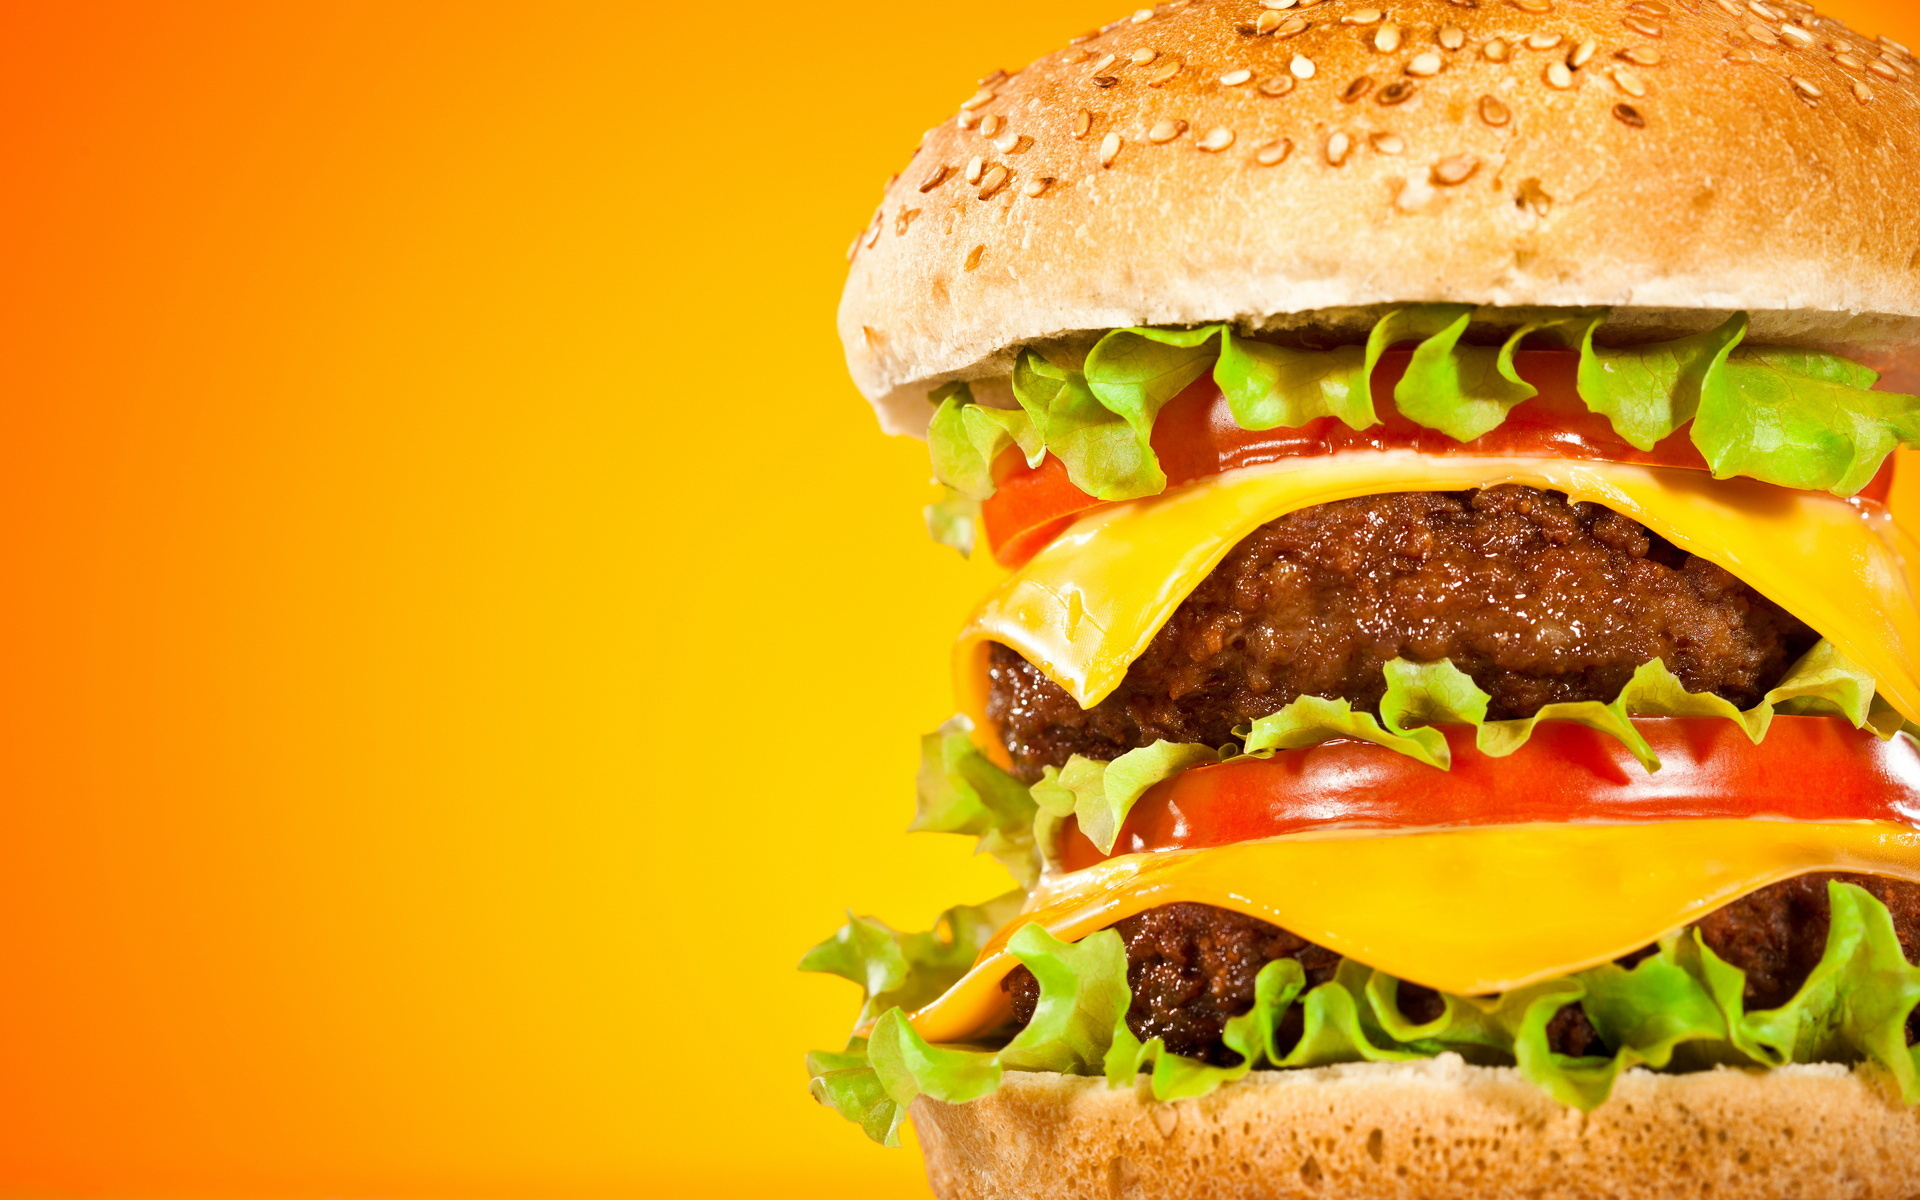 Top 28 Best Burger Wallpapers For Desktop, PC, Laptop, Computer [ 4k, HD ]